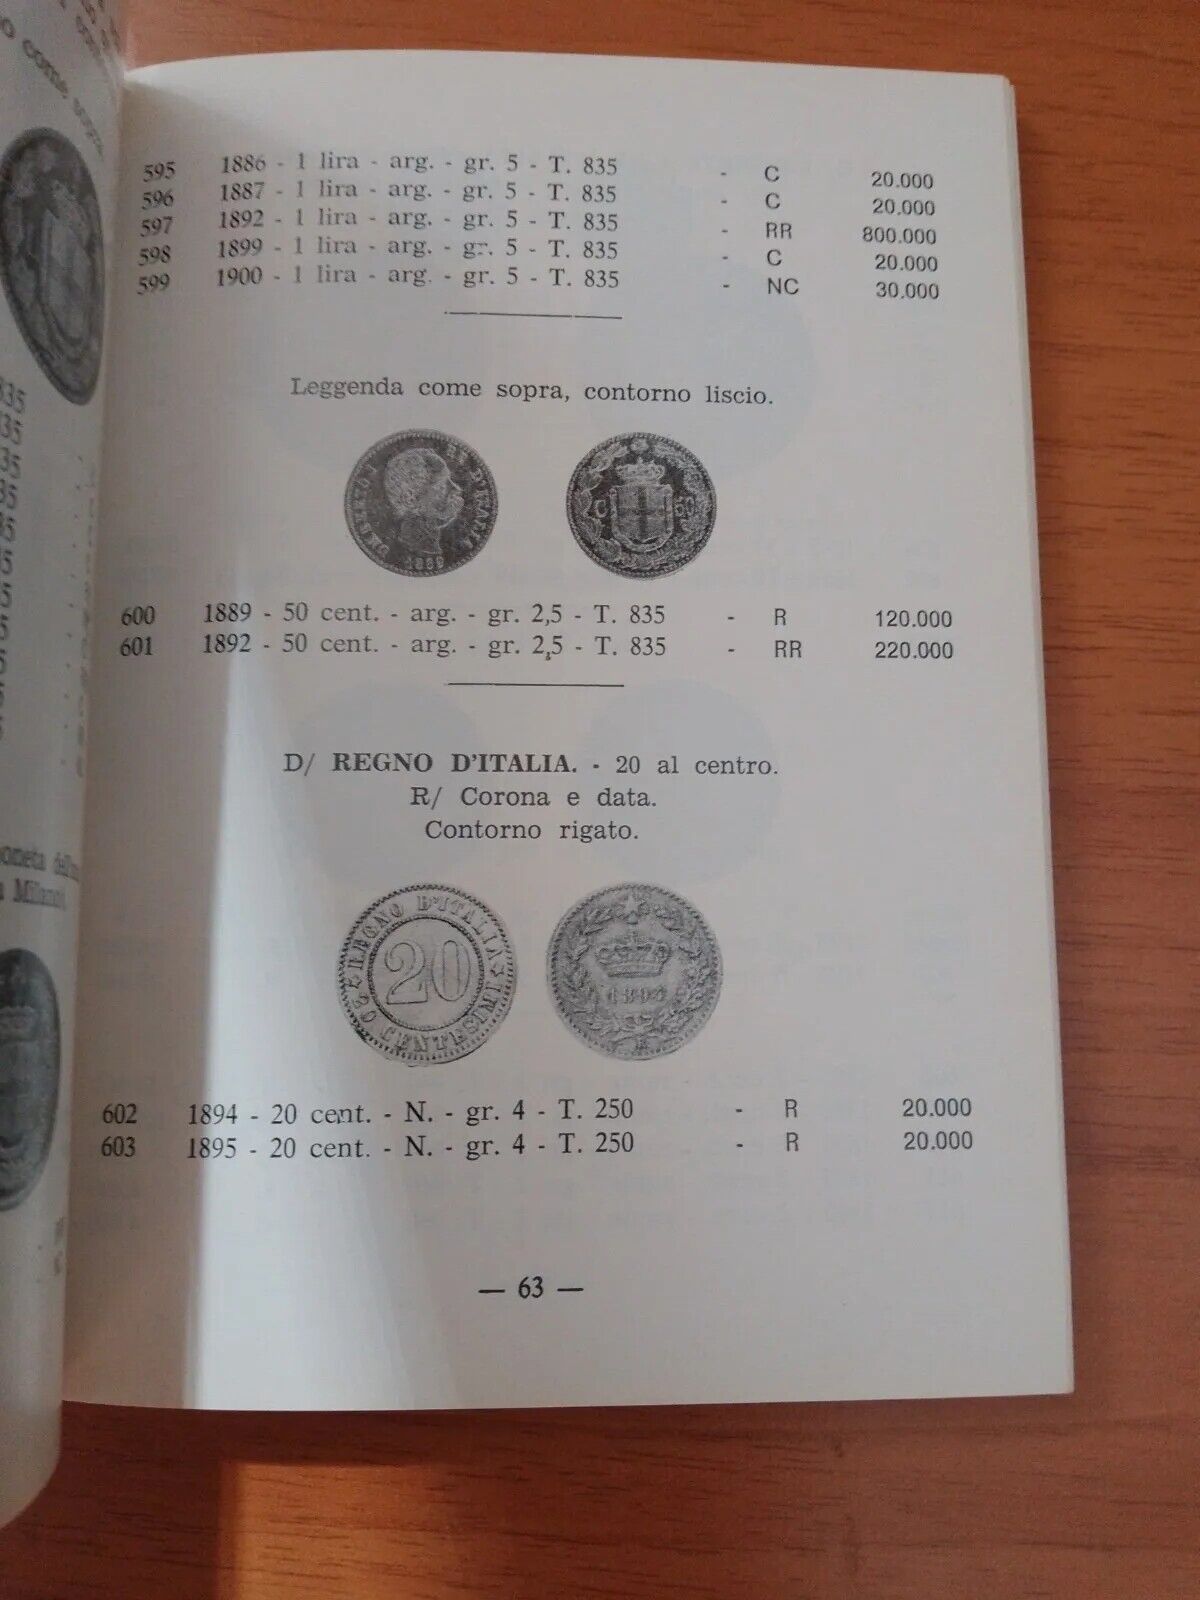 Monete Italiane - Catalogo 1978 - Frisione